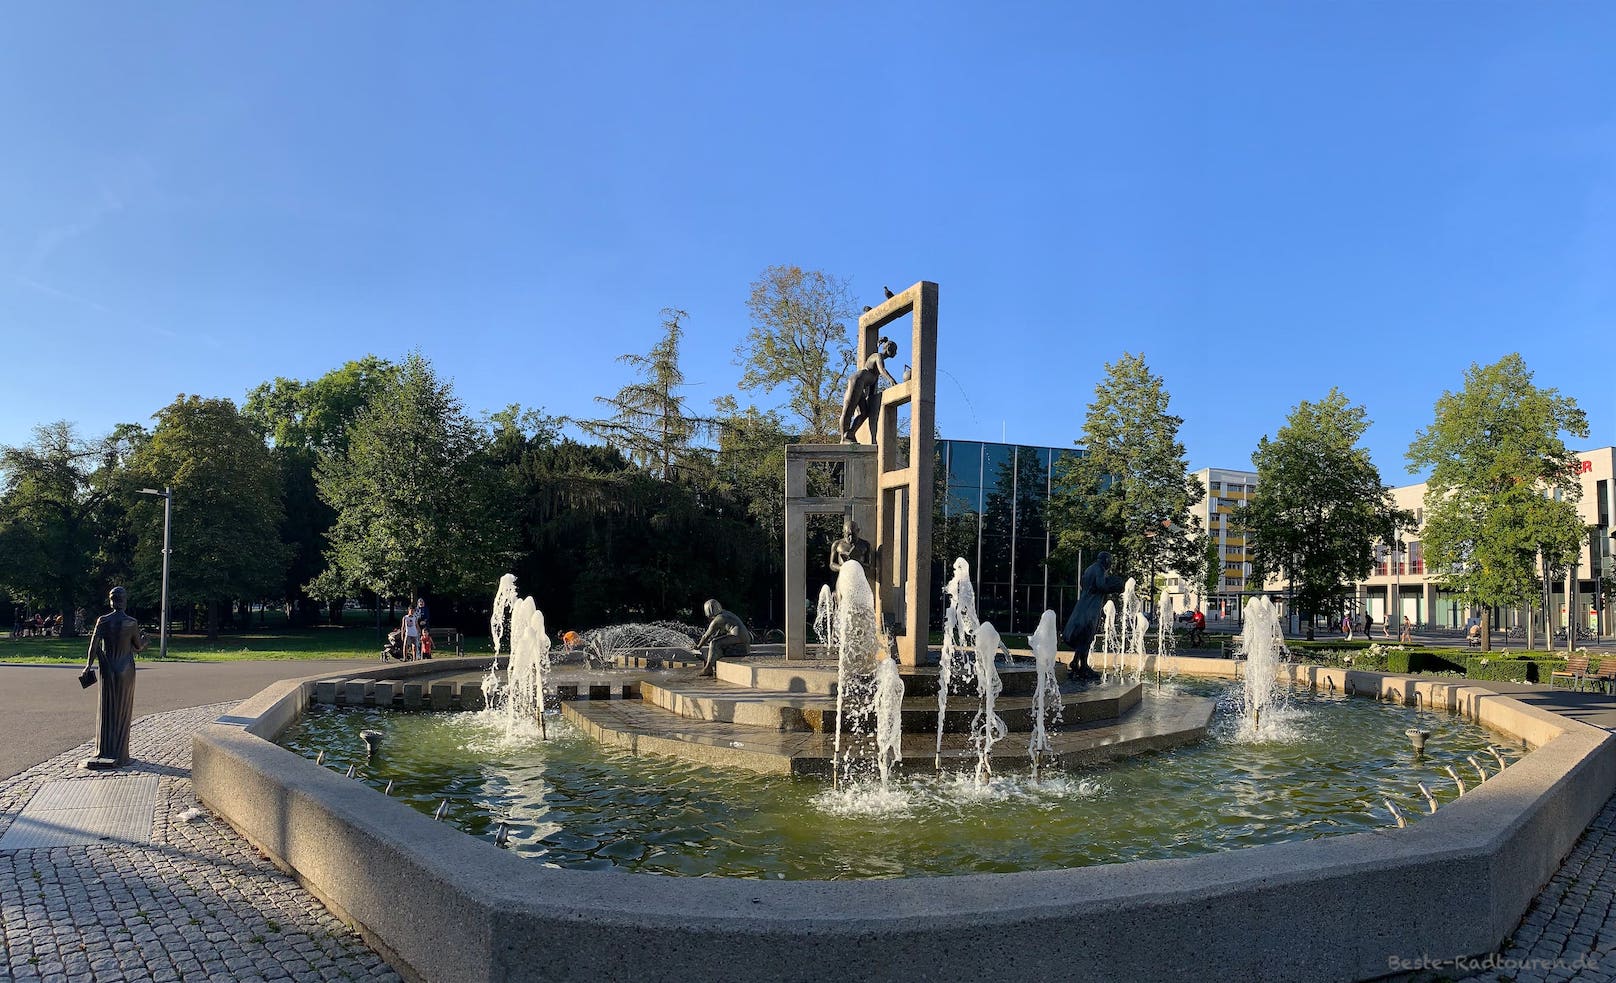 Markanter Brunnen am Stadtpark Dessau, dahinter verspiegeltes Gebäude: Bauhausmuseum